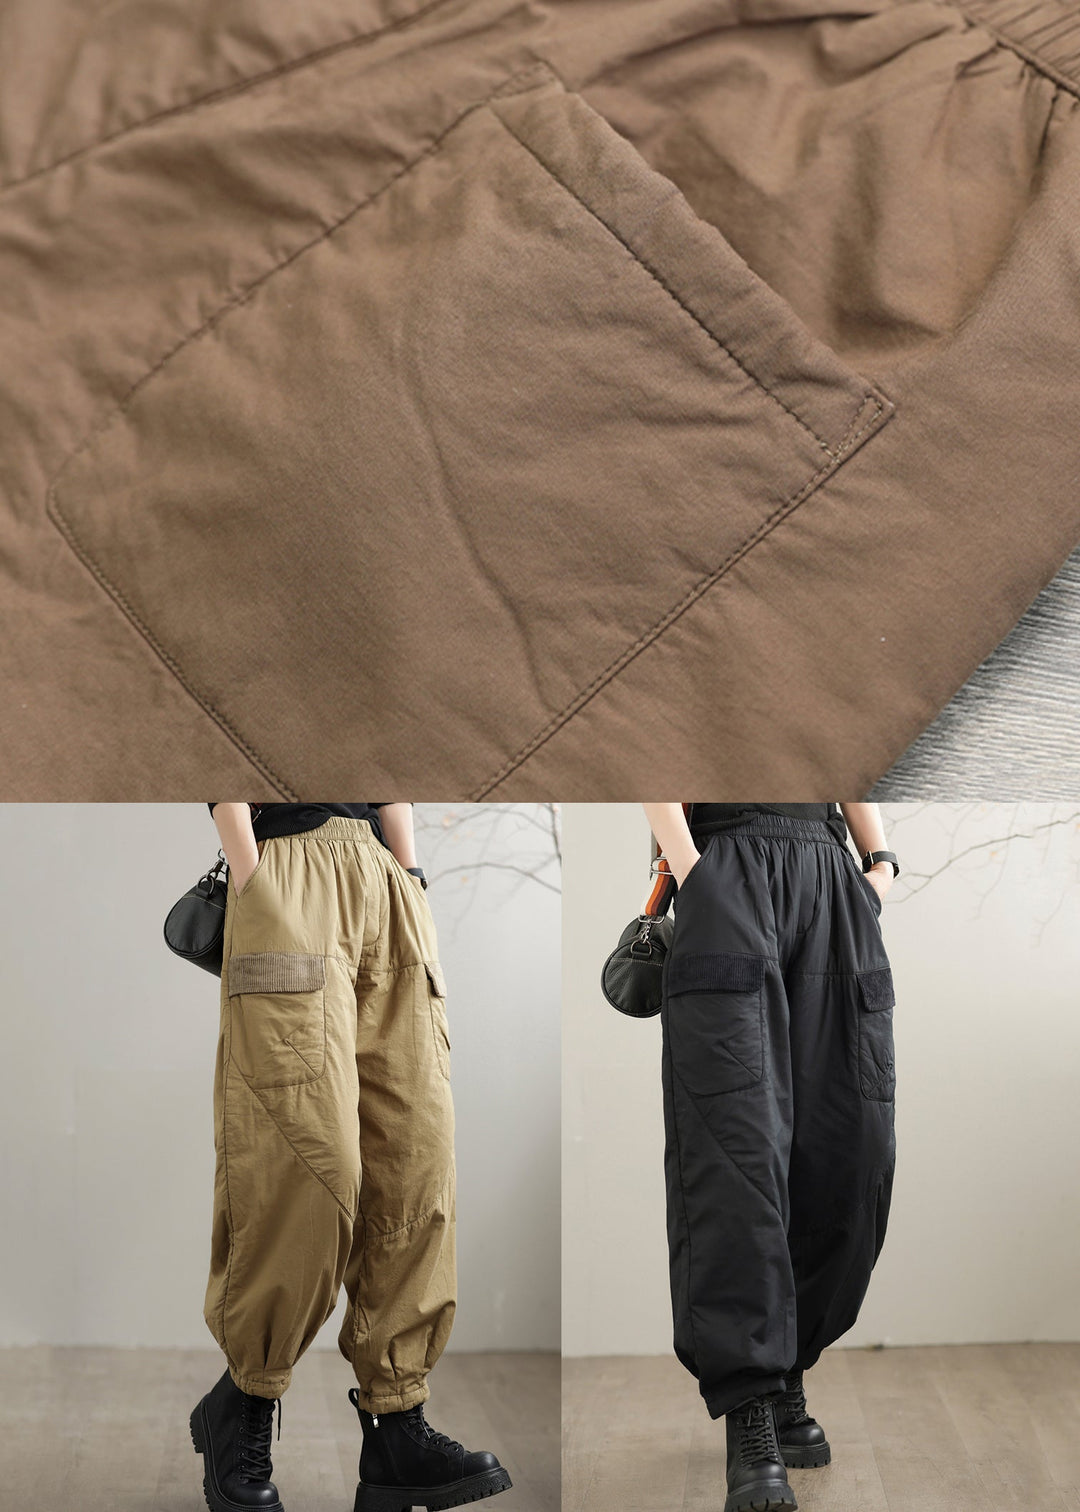 Coffee Pockets Cozy Fine Cotton Filled Pants Elastic Waist Winter